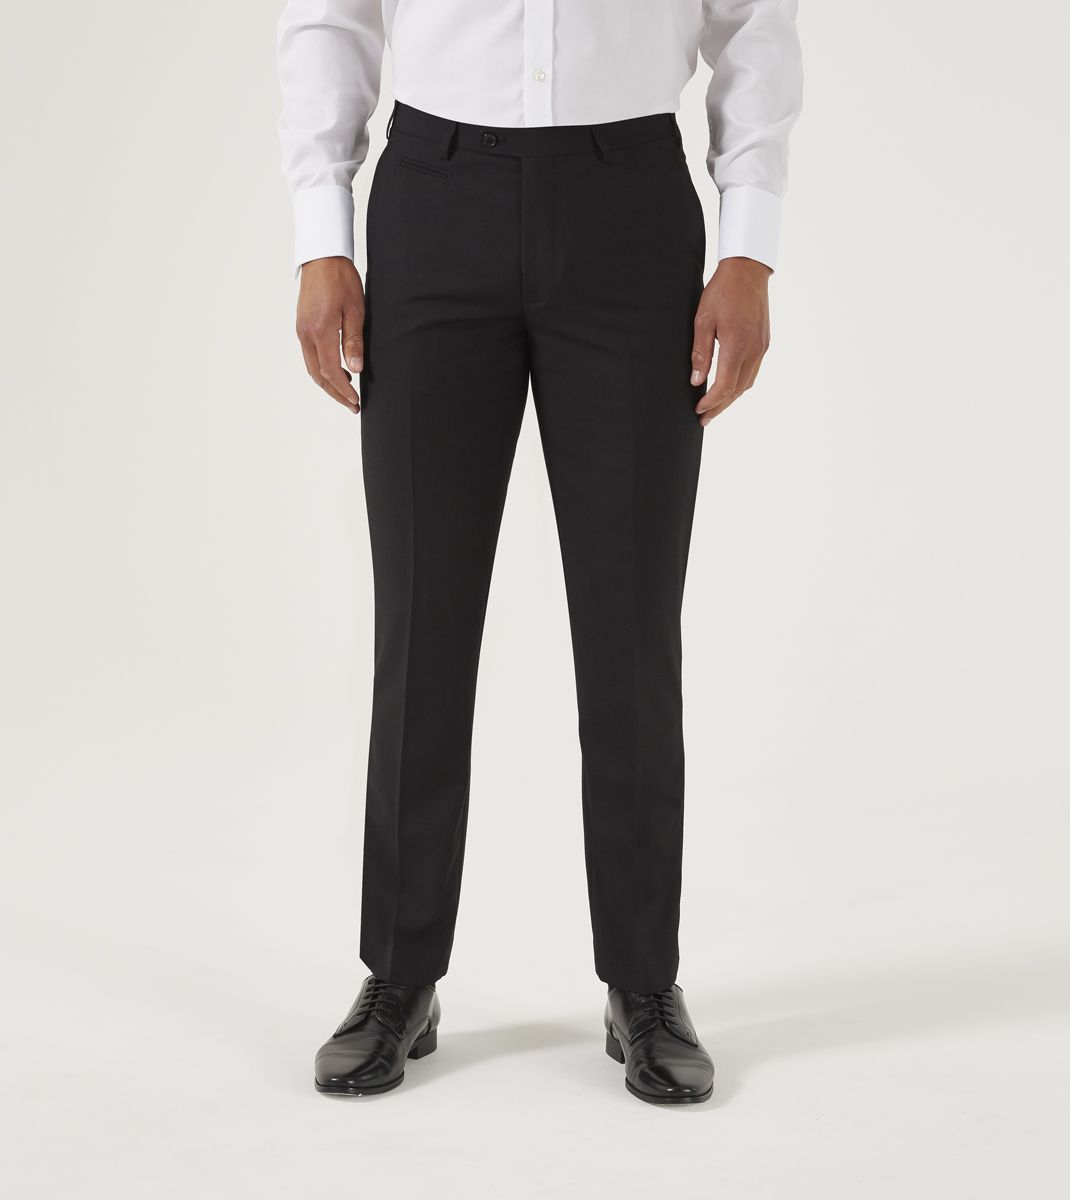 Skopes Madrid - Black Suit Trousers - Hores Stores